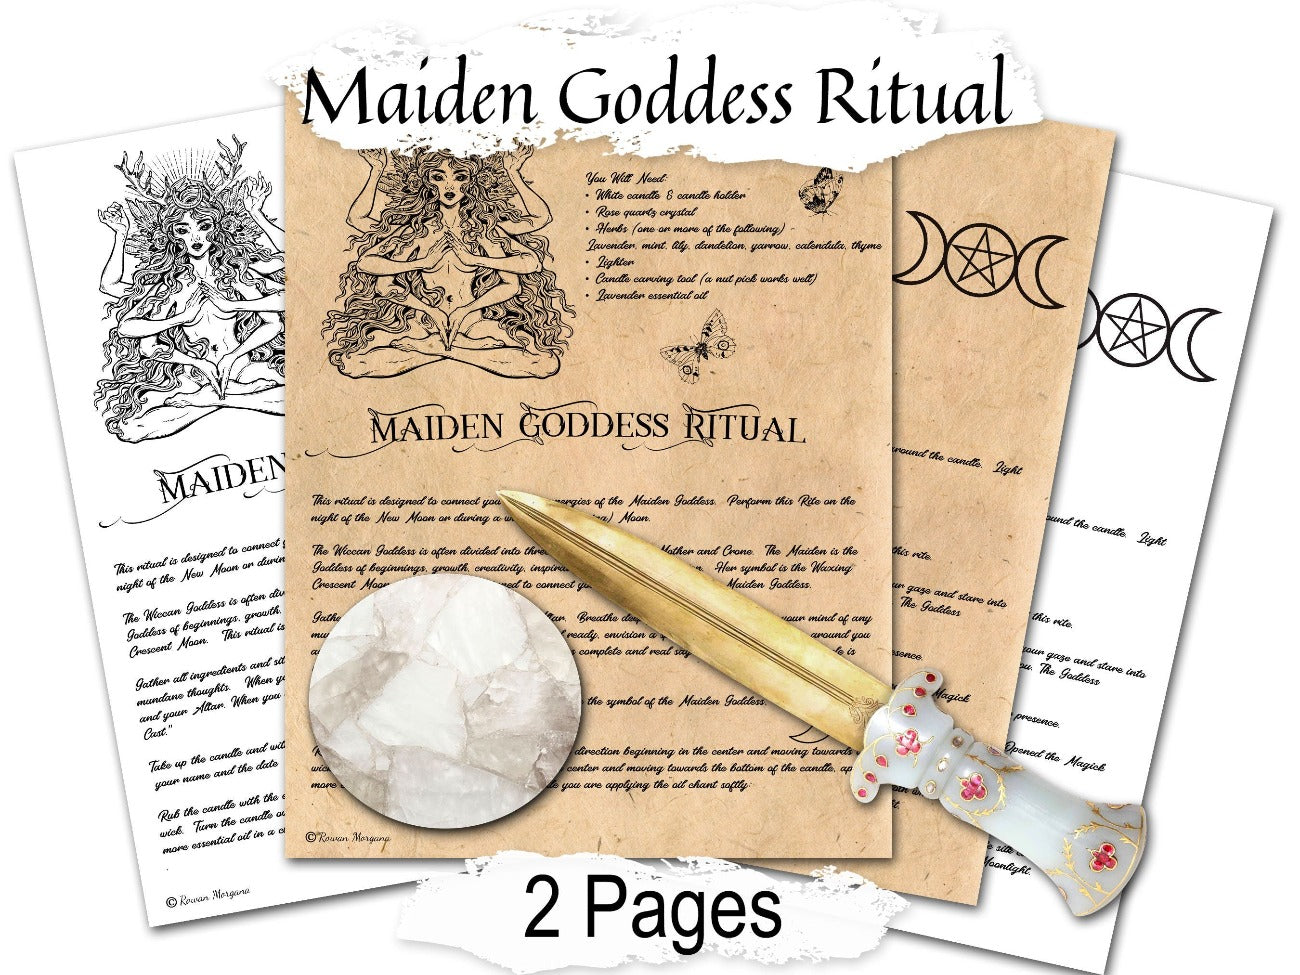 MAIDEN GODDESS RITUAL 2 Pages, Wicca New Moon Goddess Spell, Honor the Maiden, Witchcraft Ritual, Maiden Goddess Prayer Esbat Meditation - Morgana Magick Spell